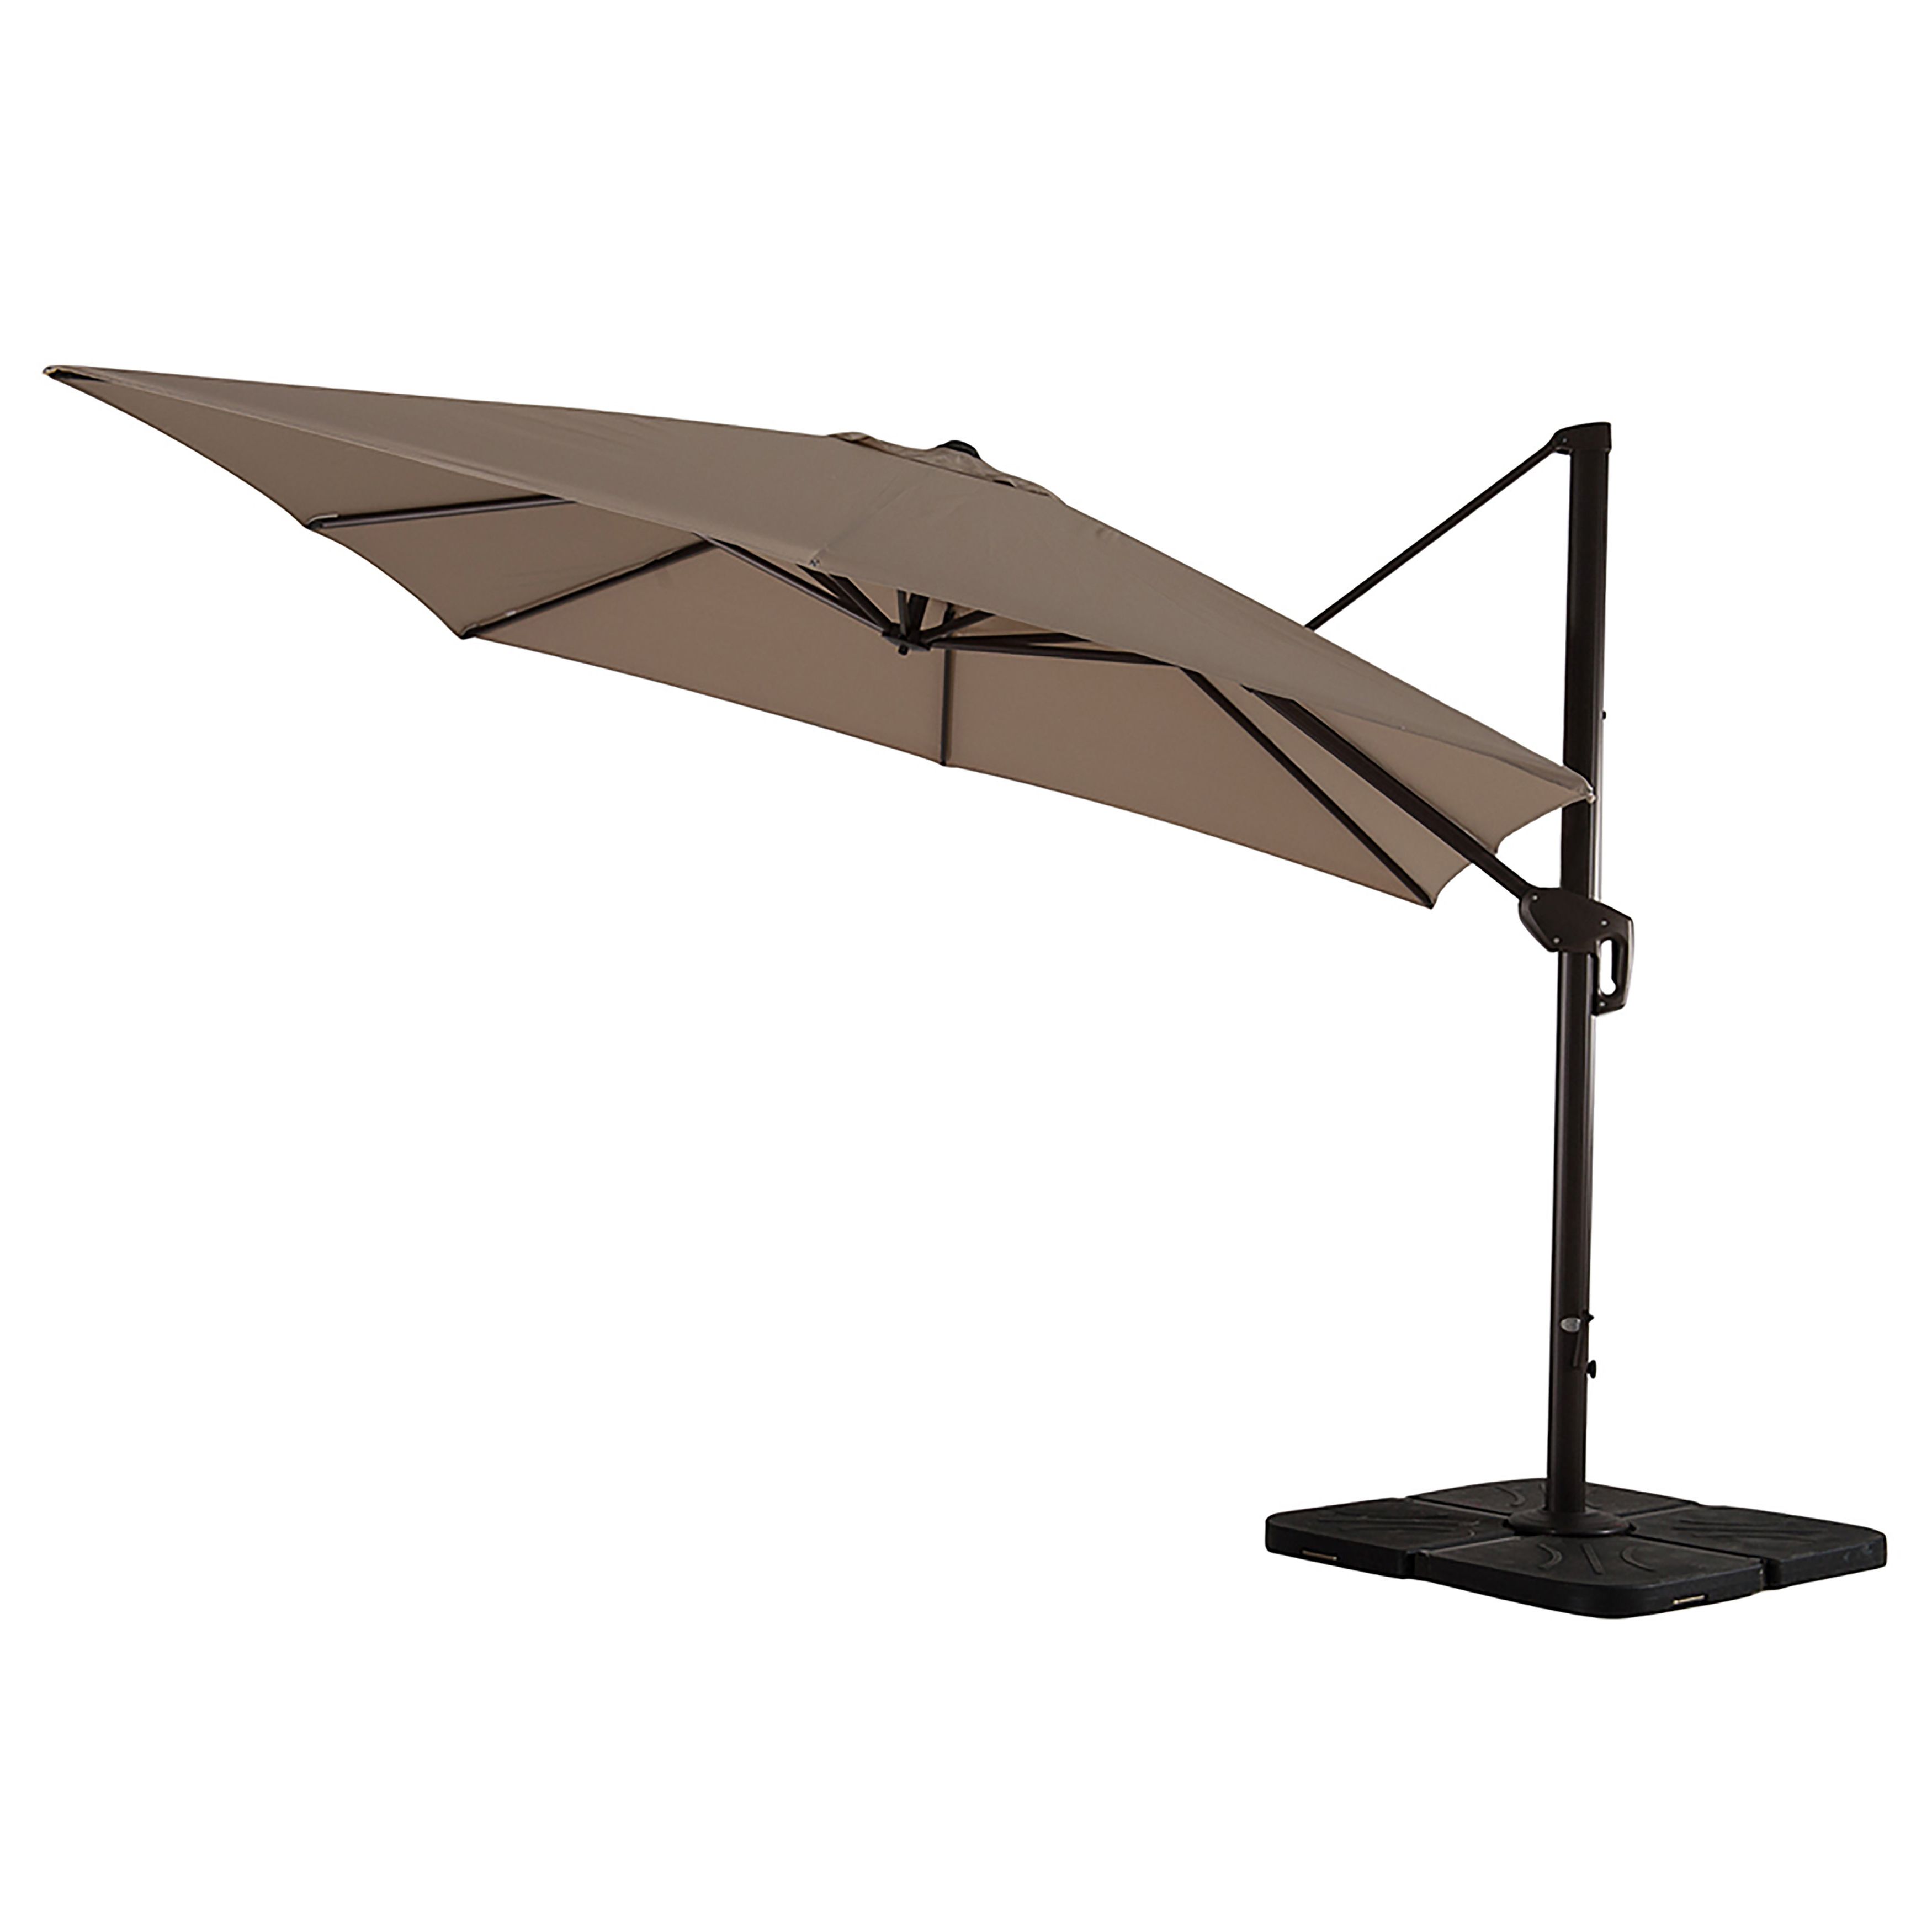 Fashionable Lia 10' Cantilever Umbrella In Grote Liberty Aluminum Square Cantilever Umbrellas (View 16 of 20)